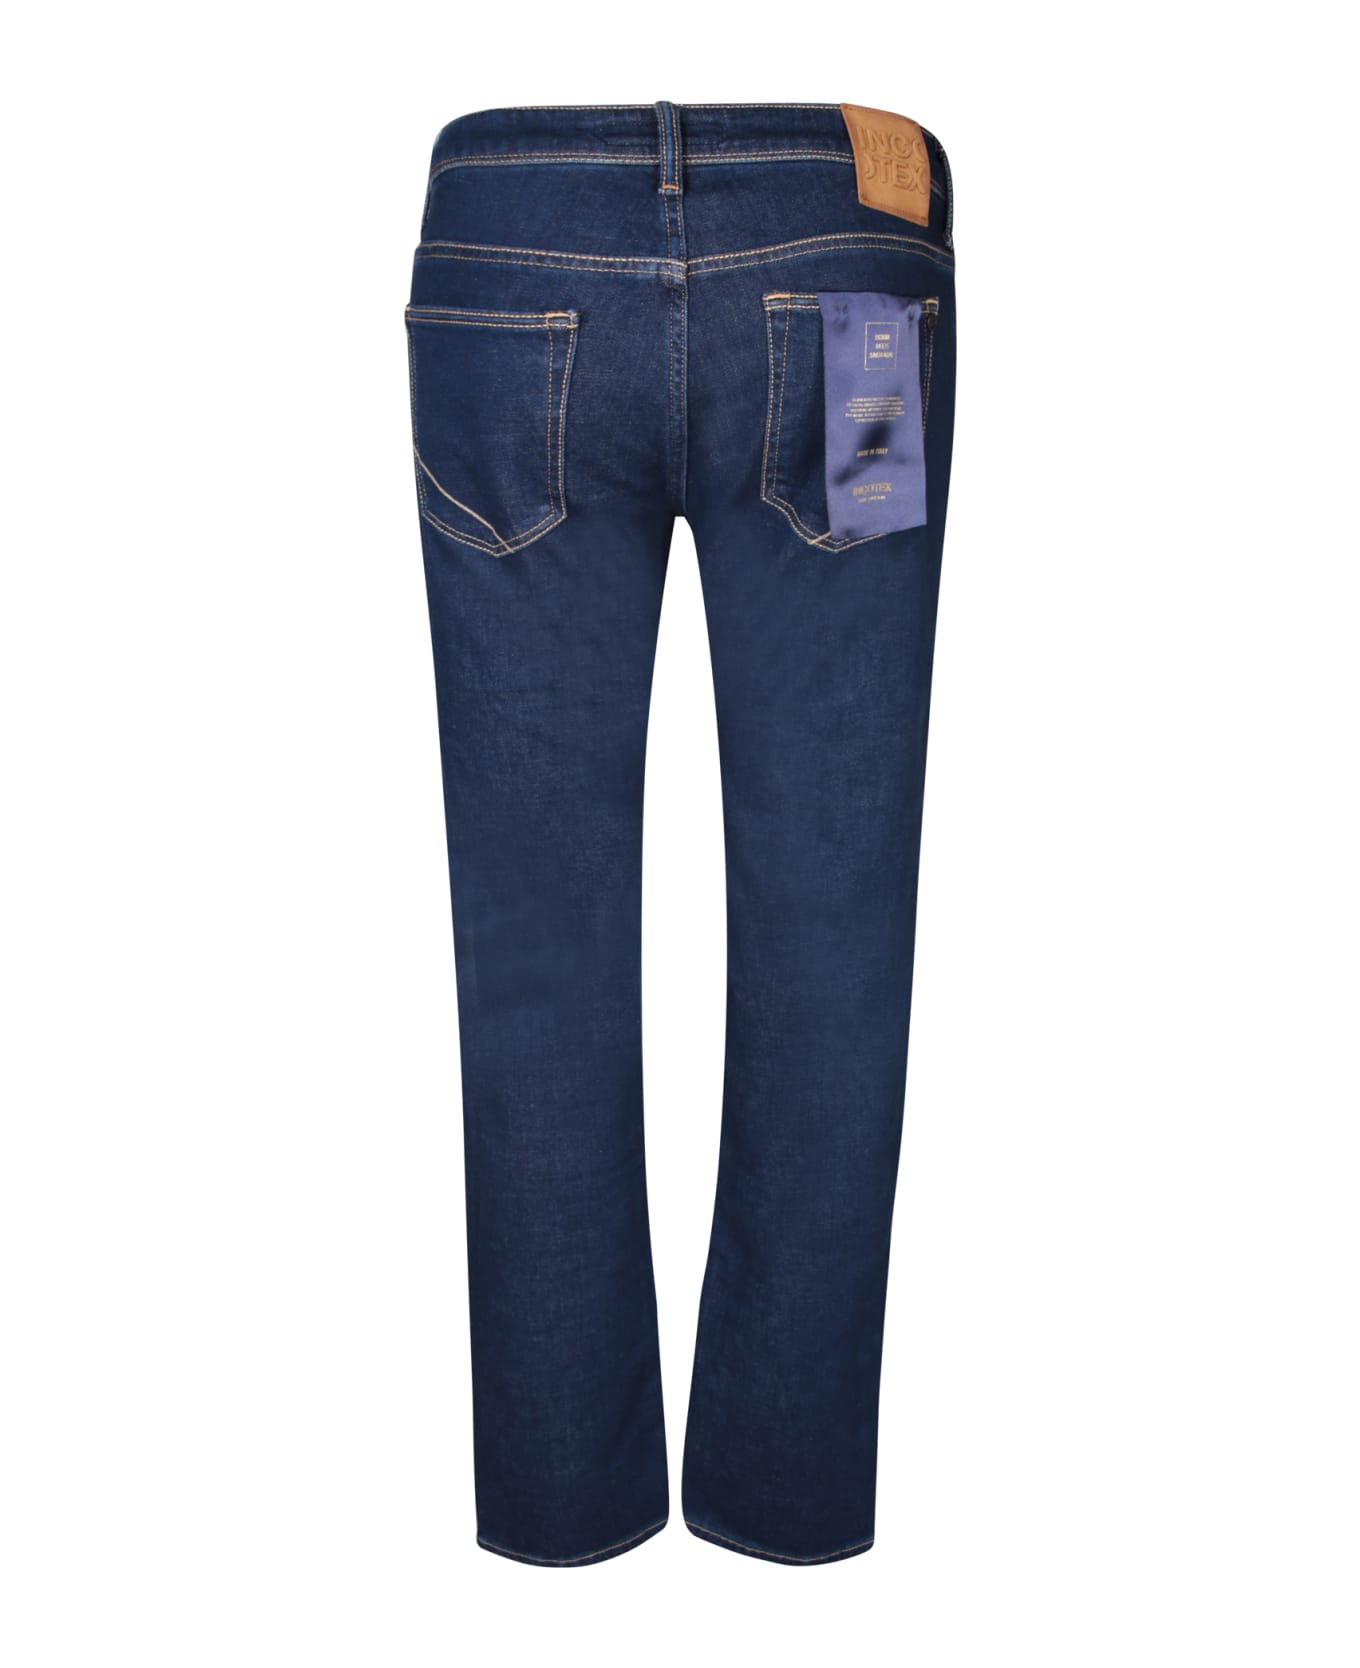 Incotex 5t Blue Denim Jeans - Blue